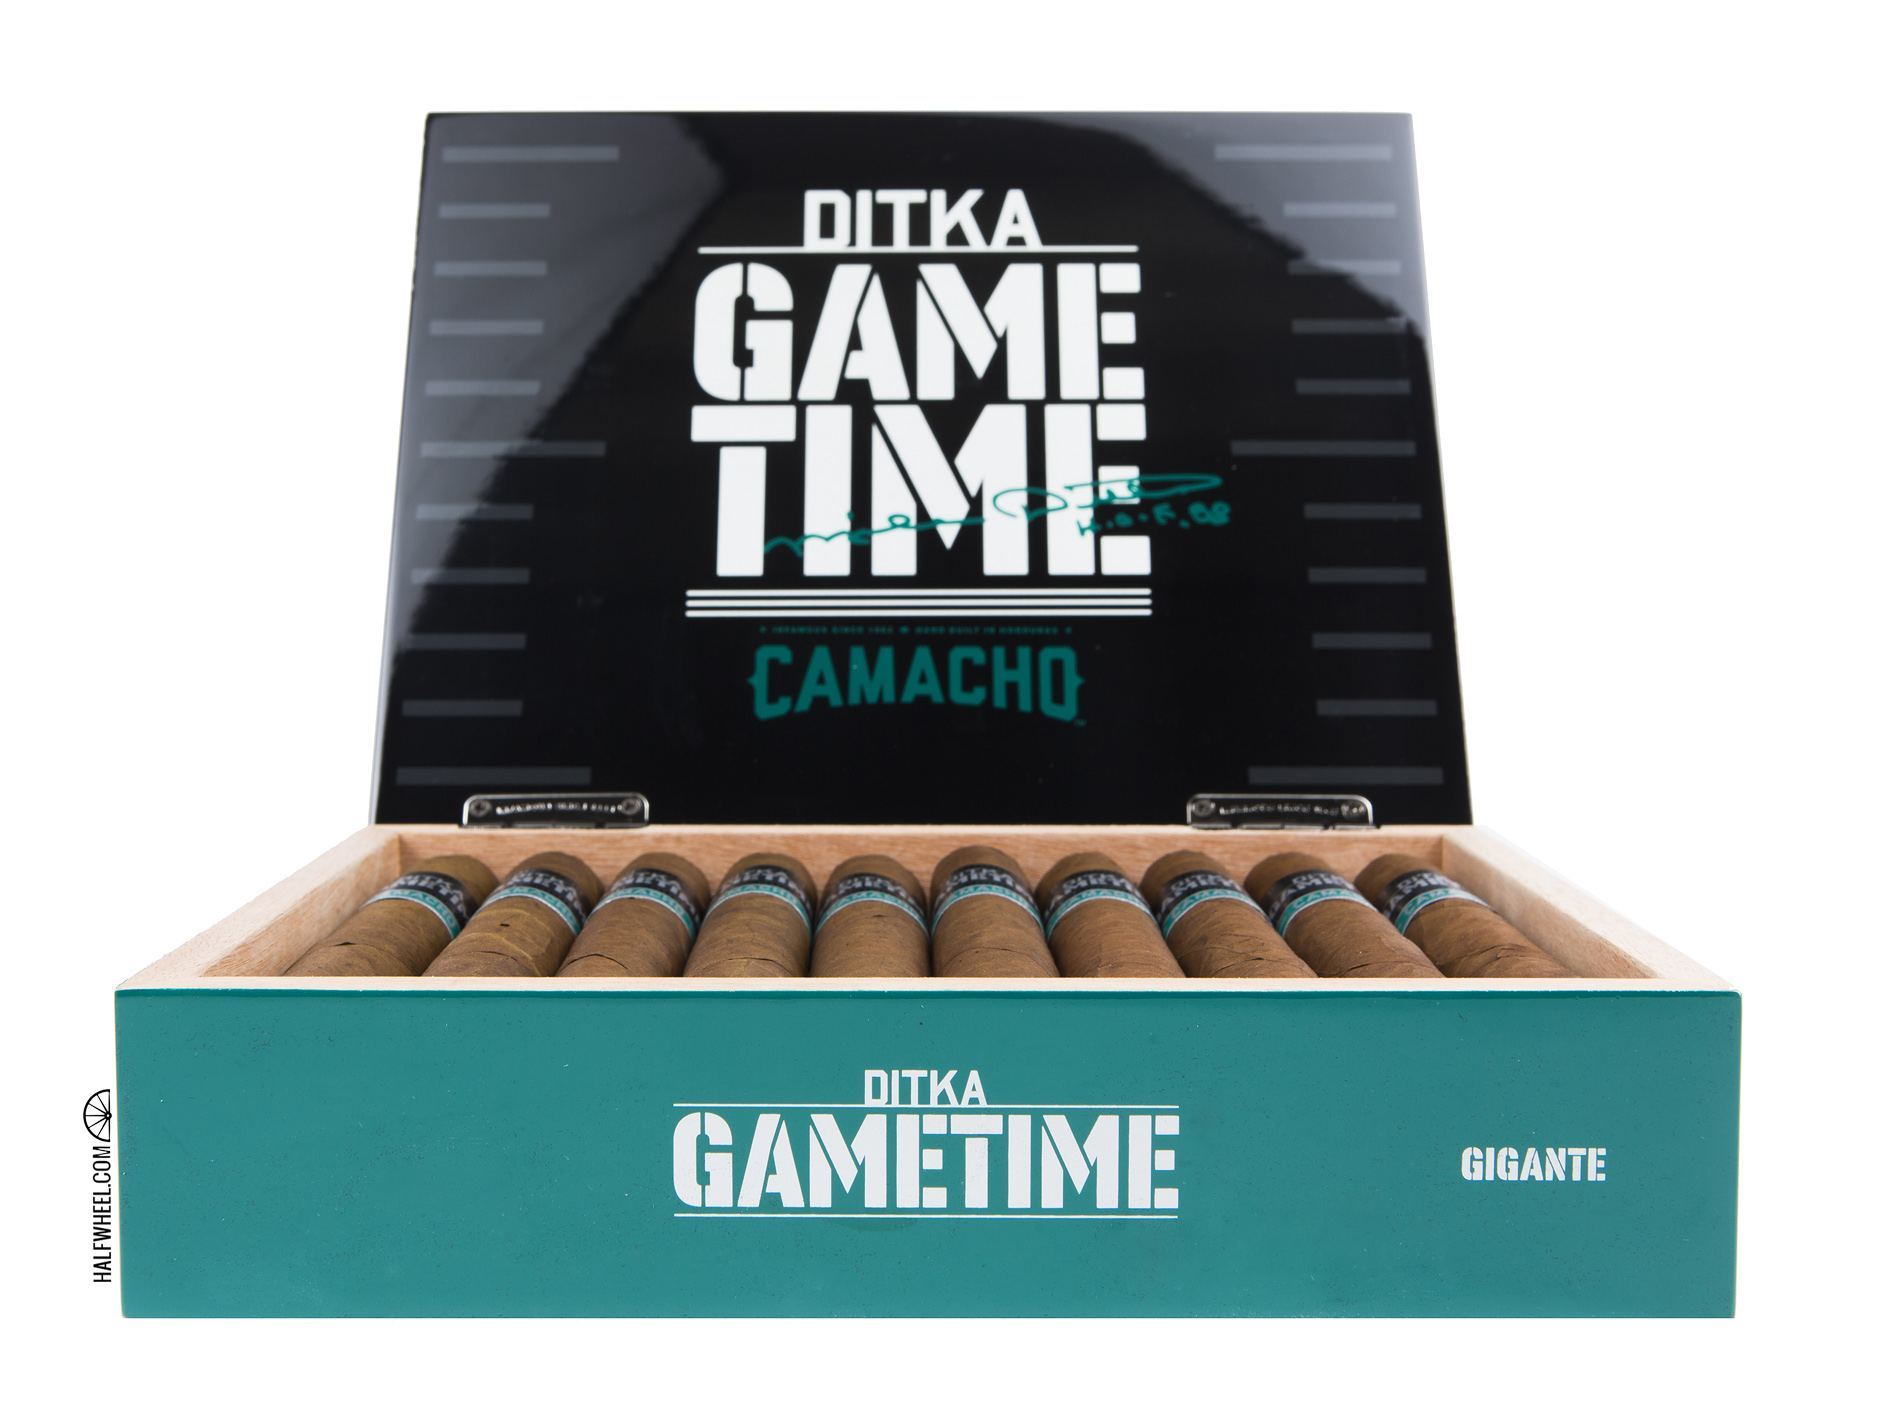 Ditka Gametime by Camacho Box 3